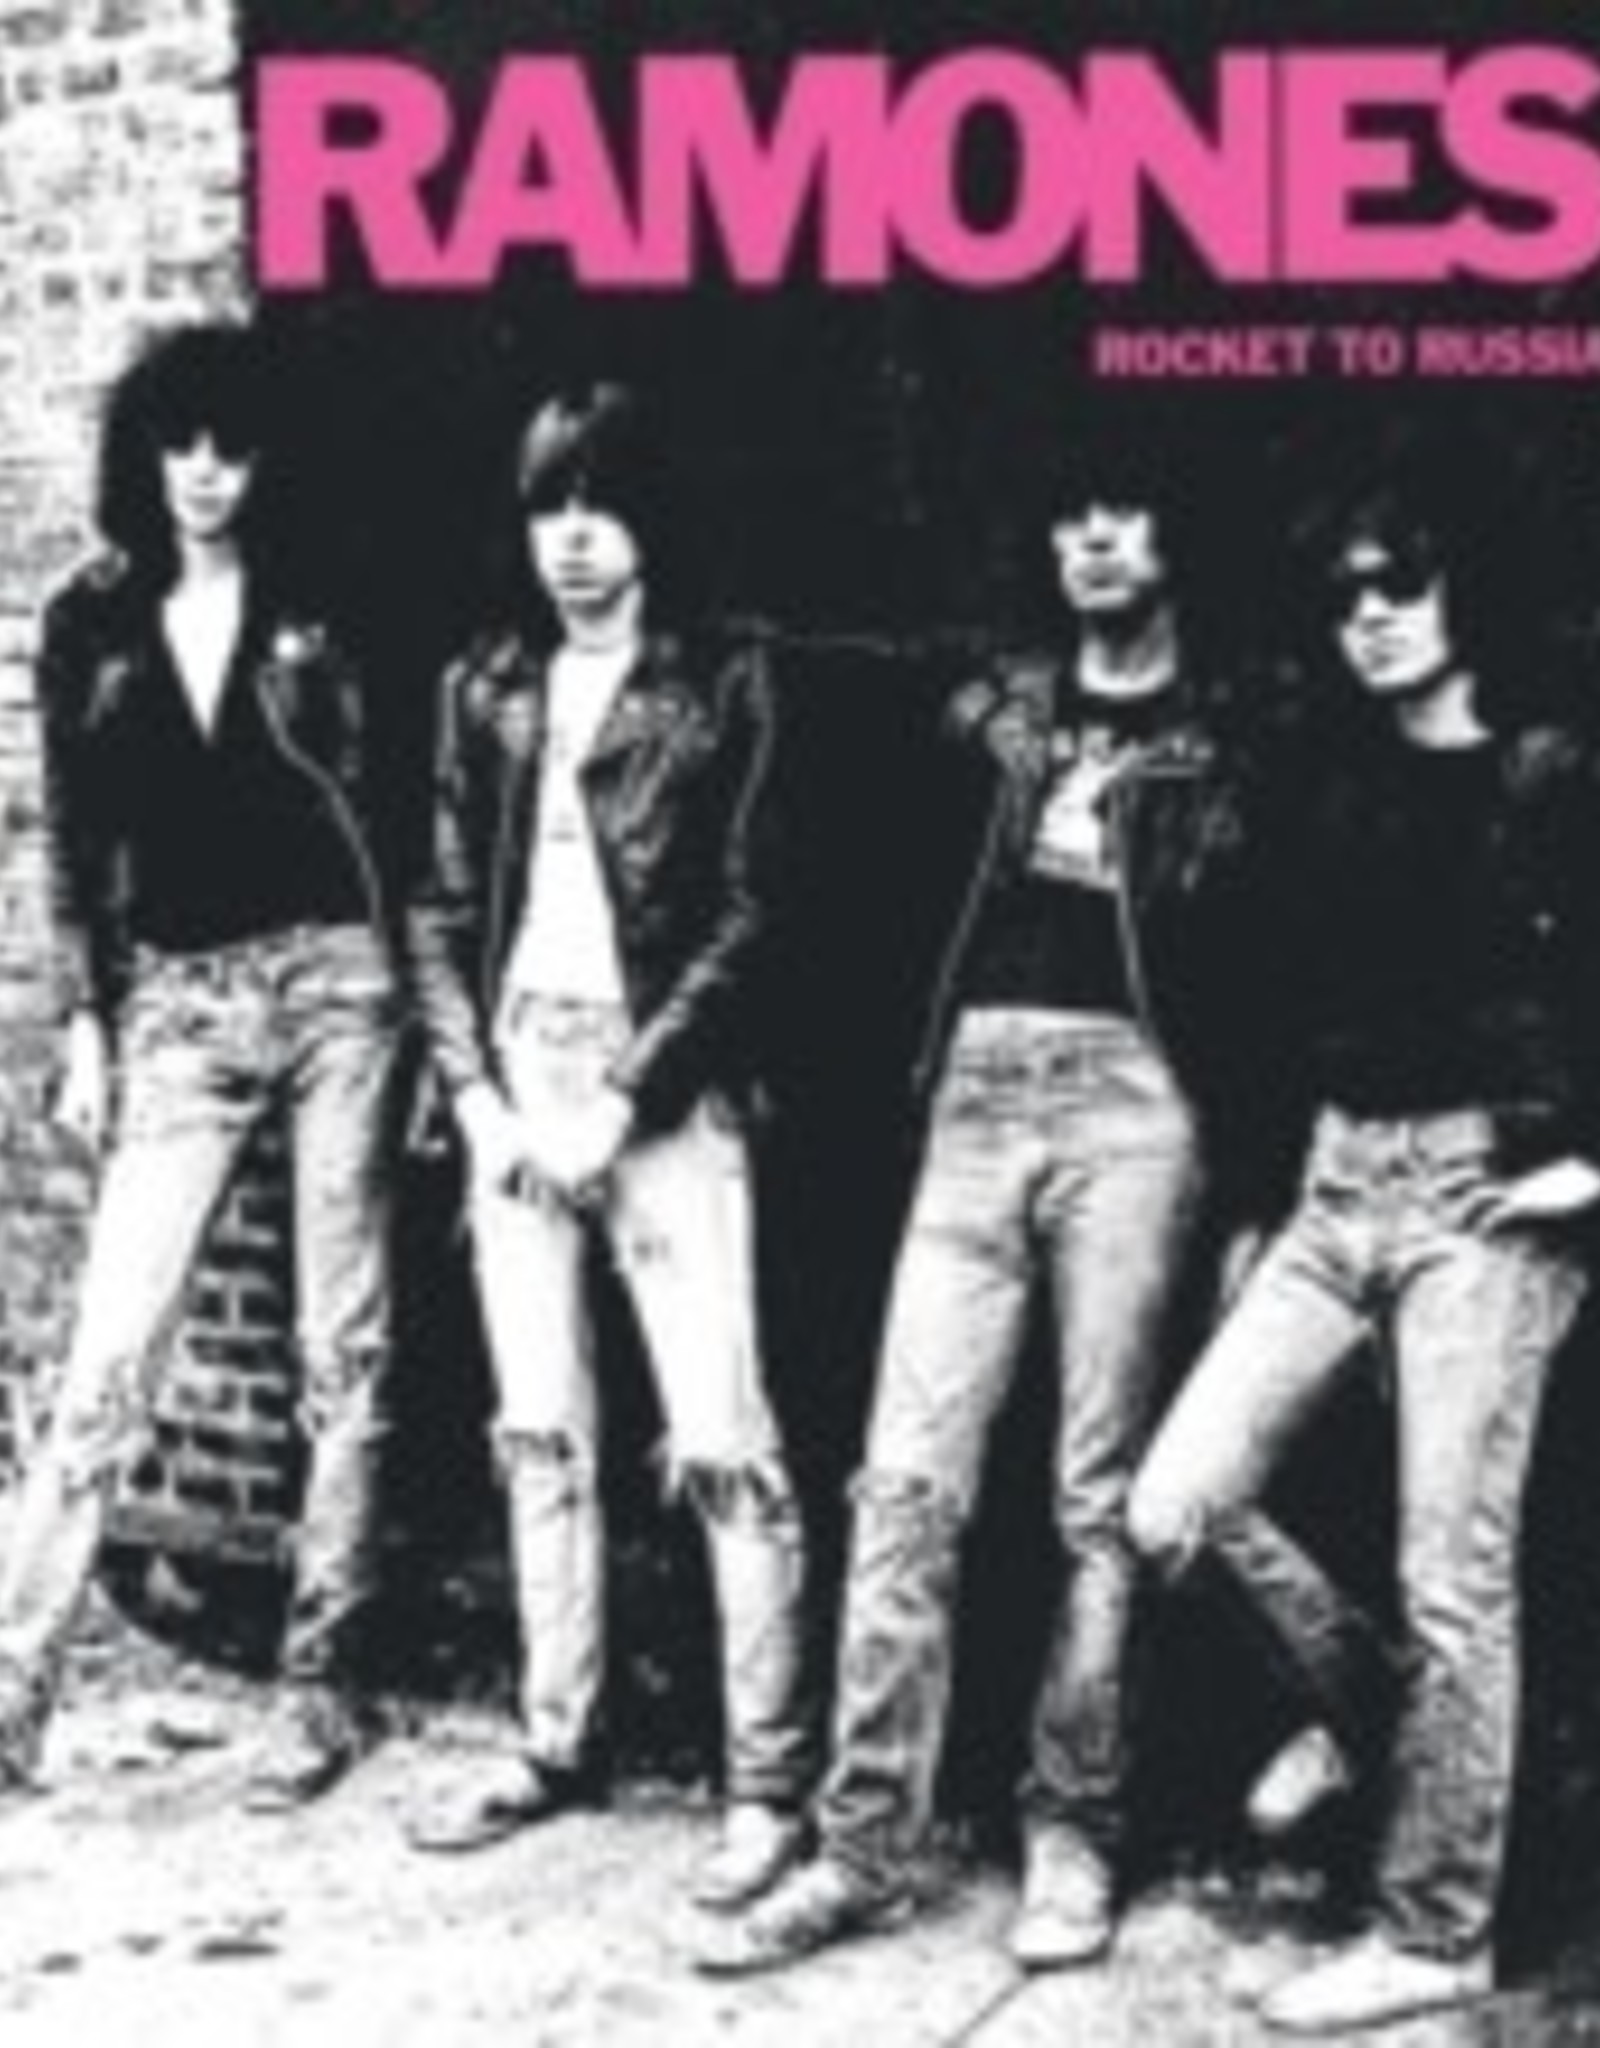 Ramones - Rocket to Russia (Clear Vinyl)